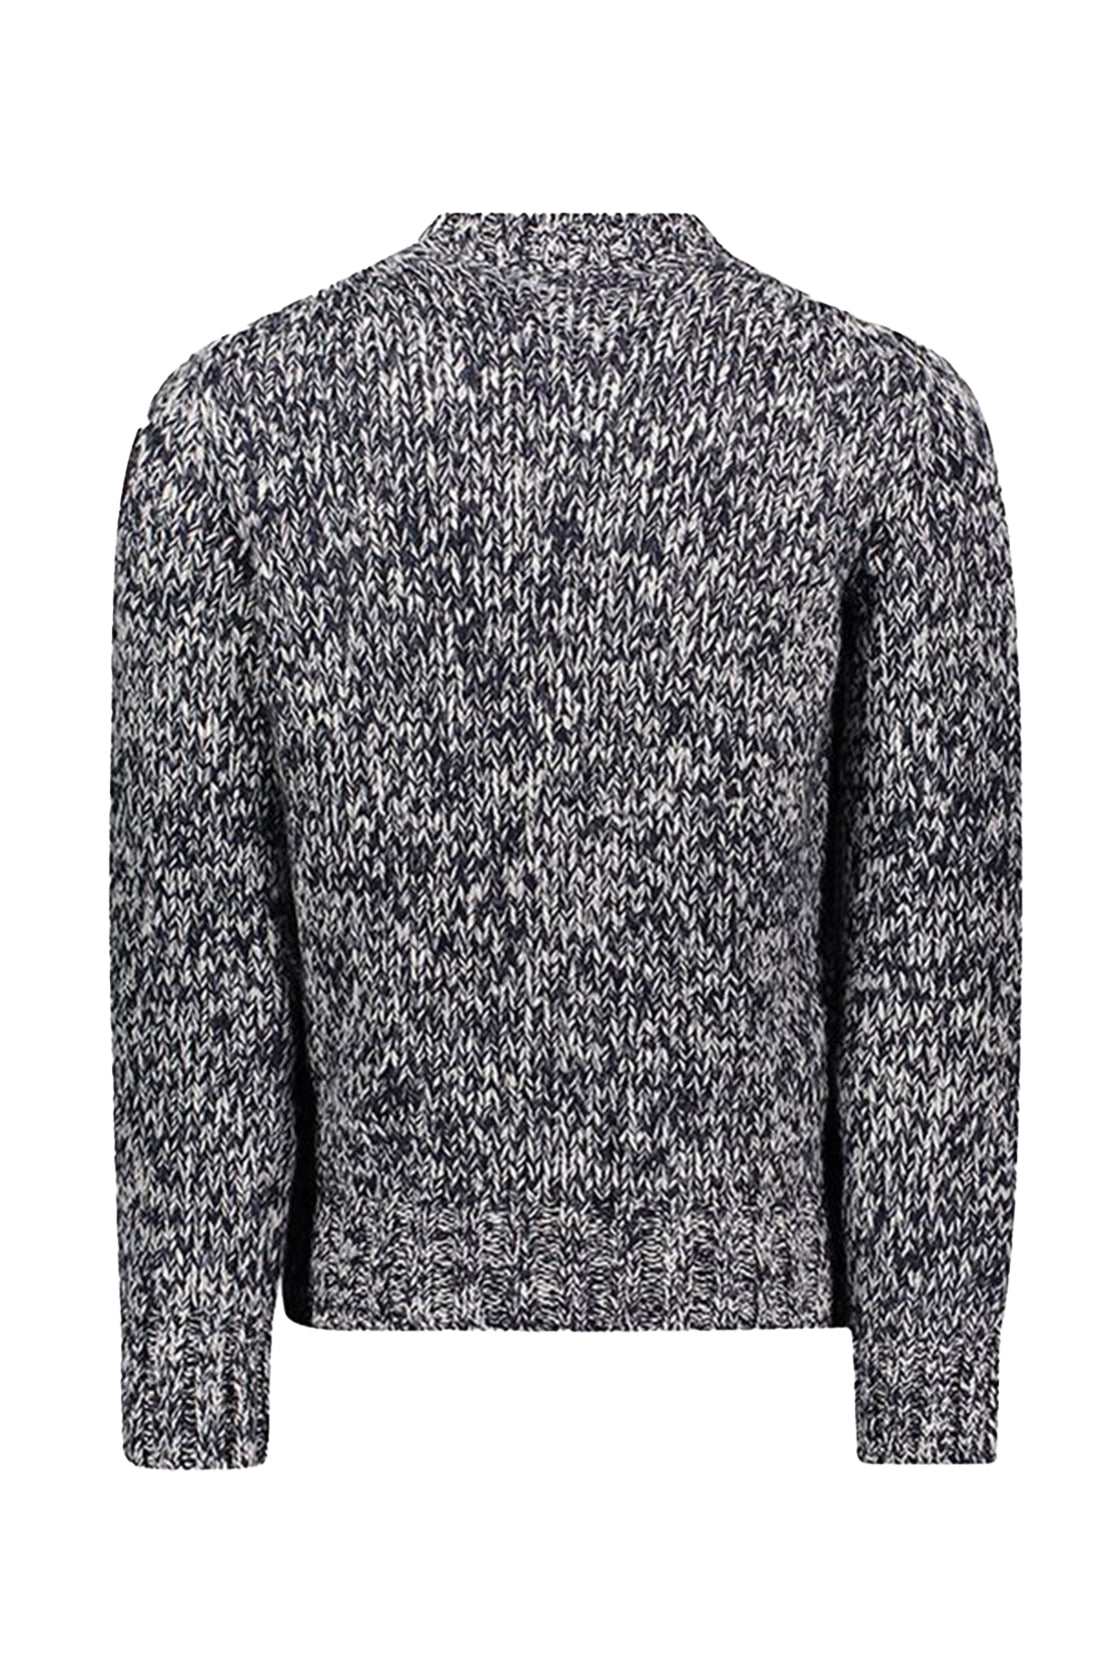 Paul & Shark Wool CN Sweater Black/White